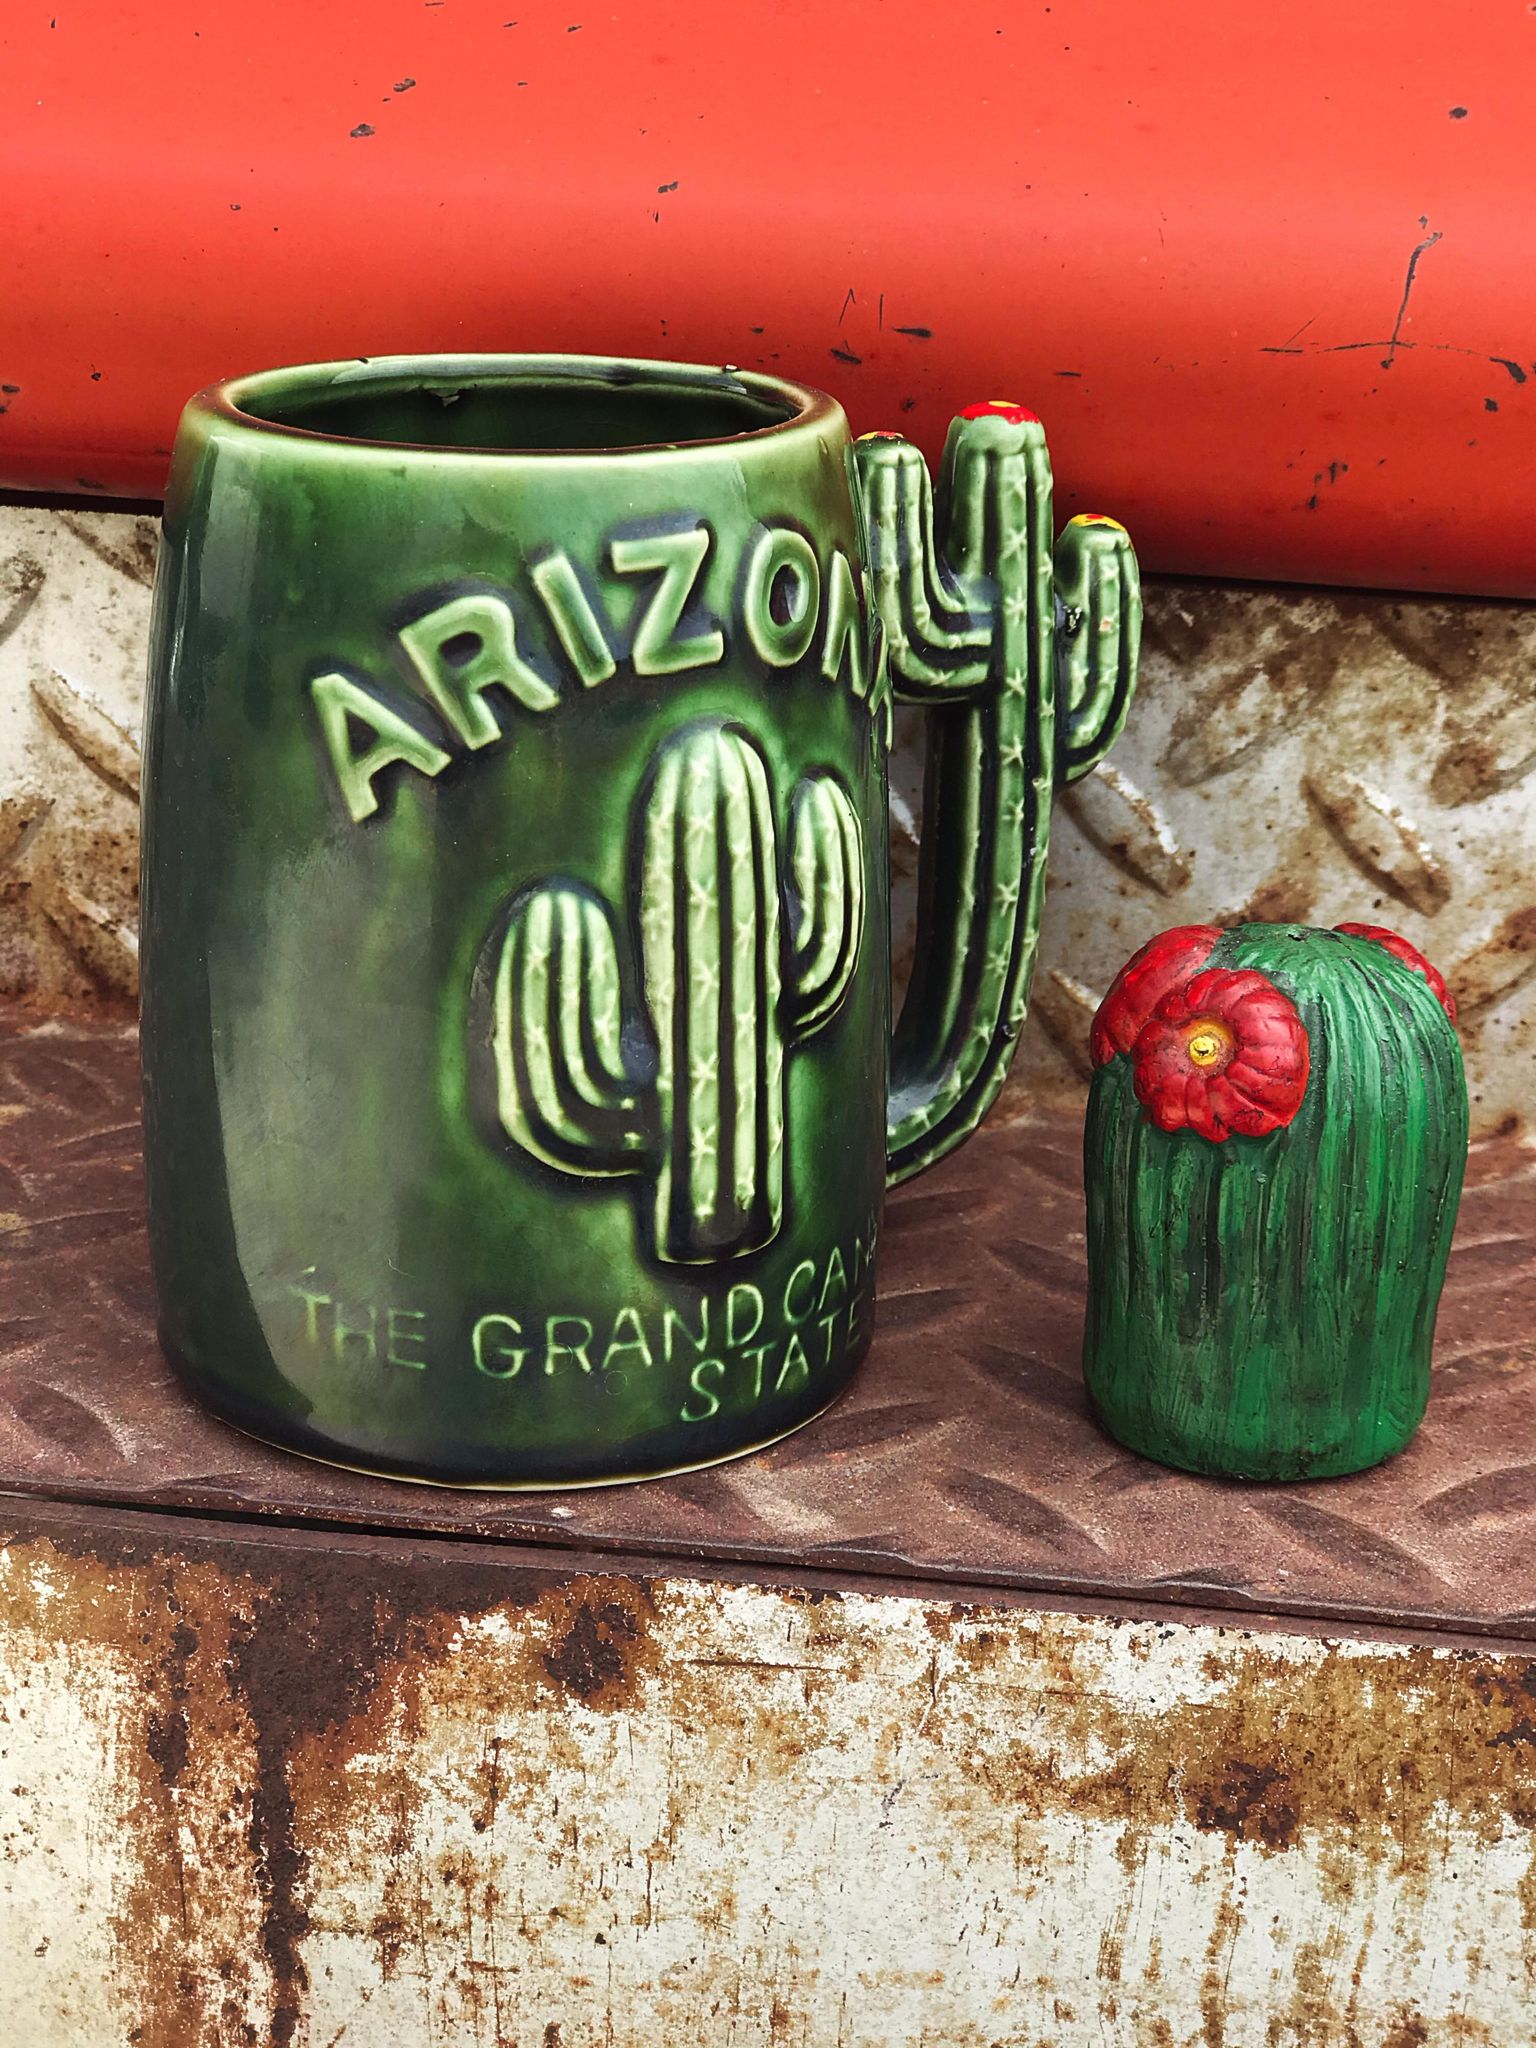 Vintage Souvenir Mug from Arizona